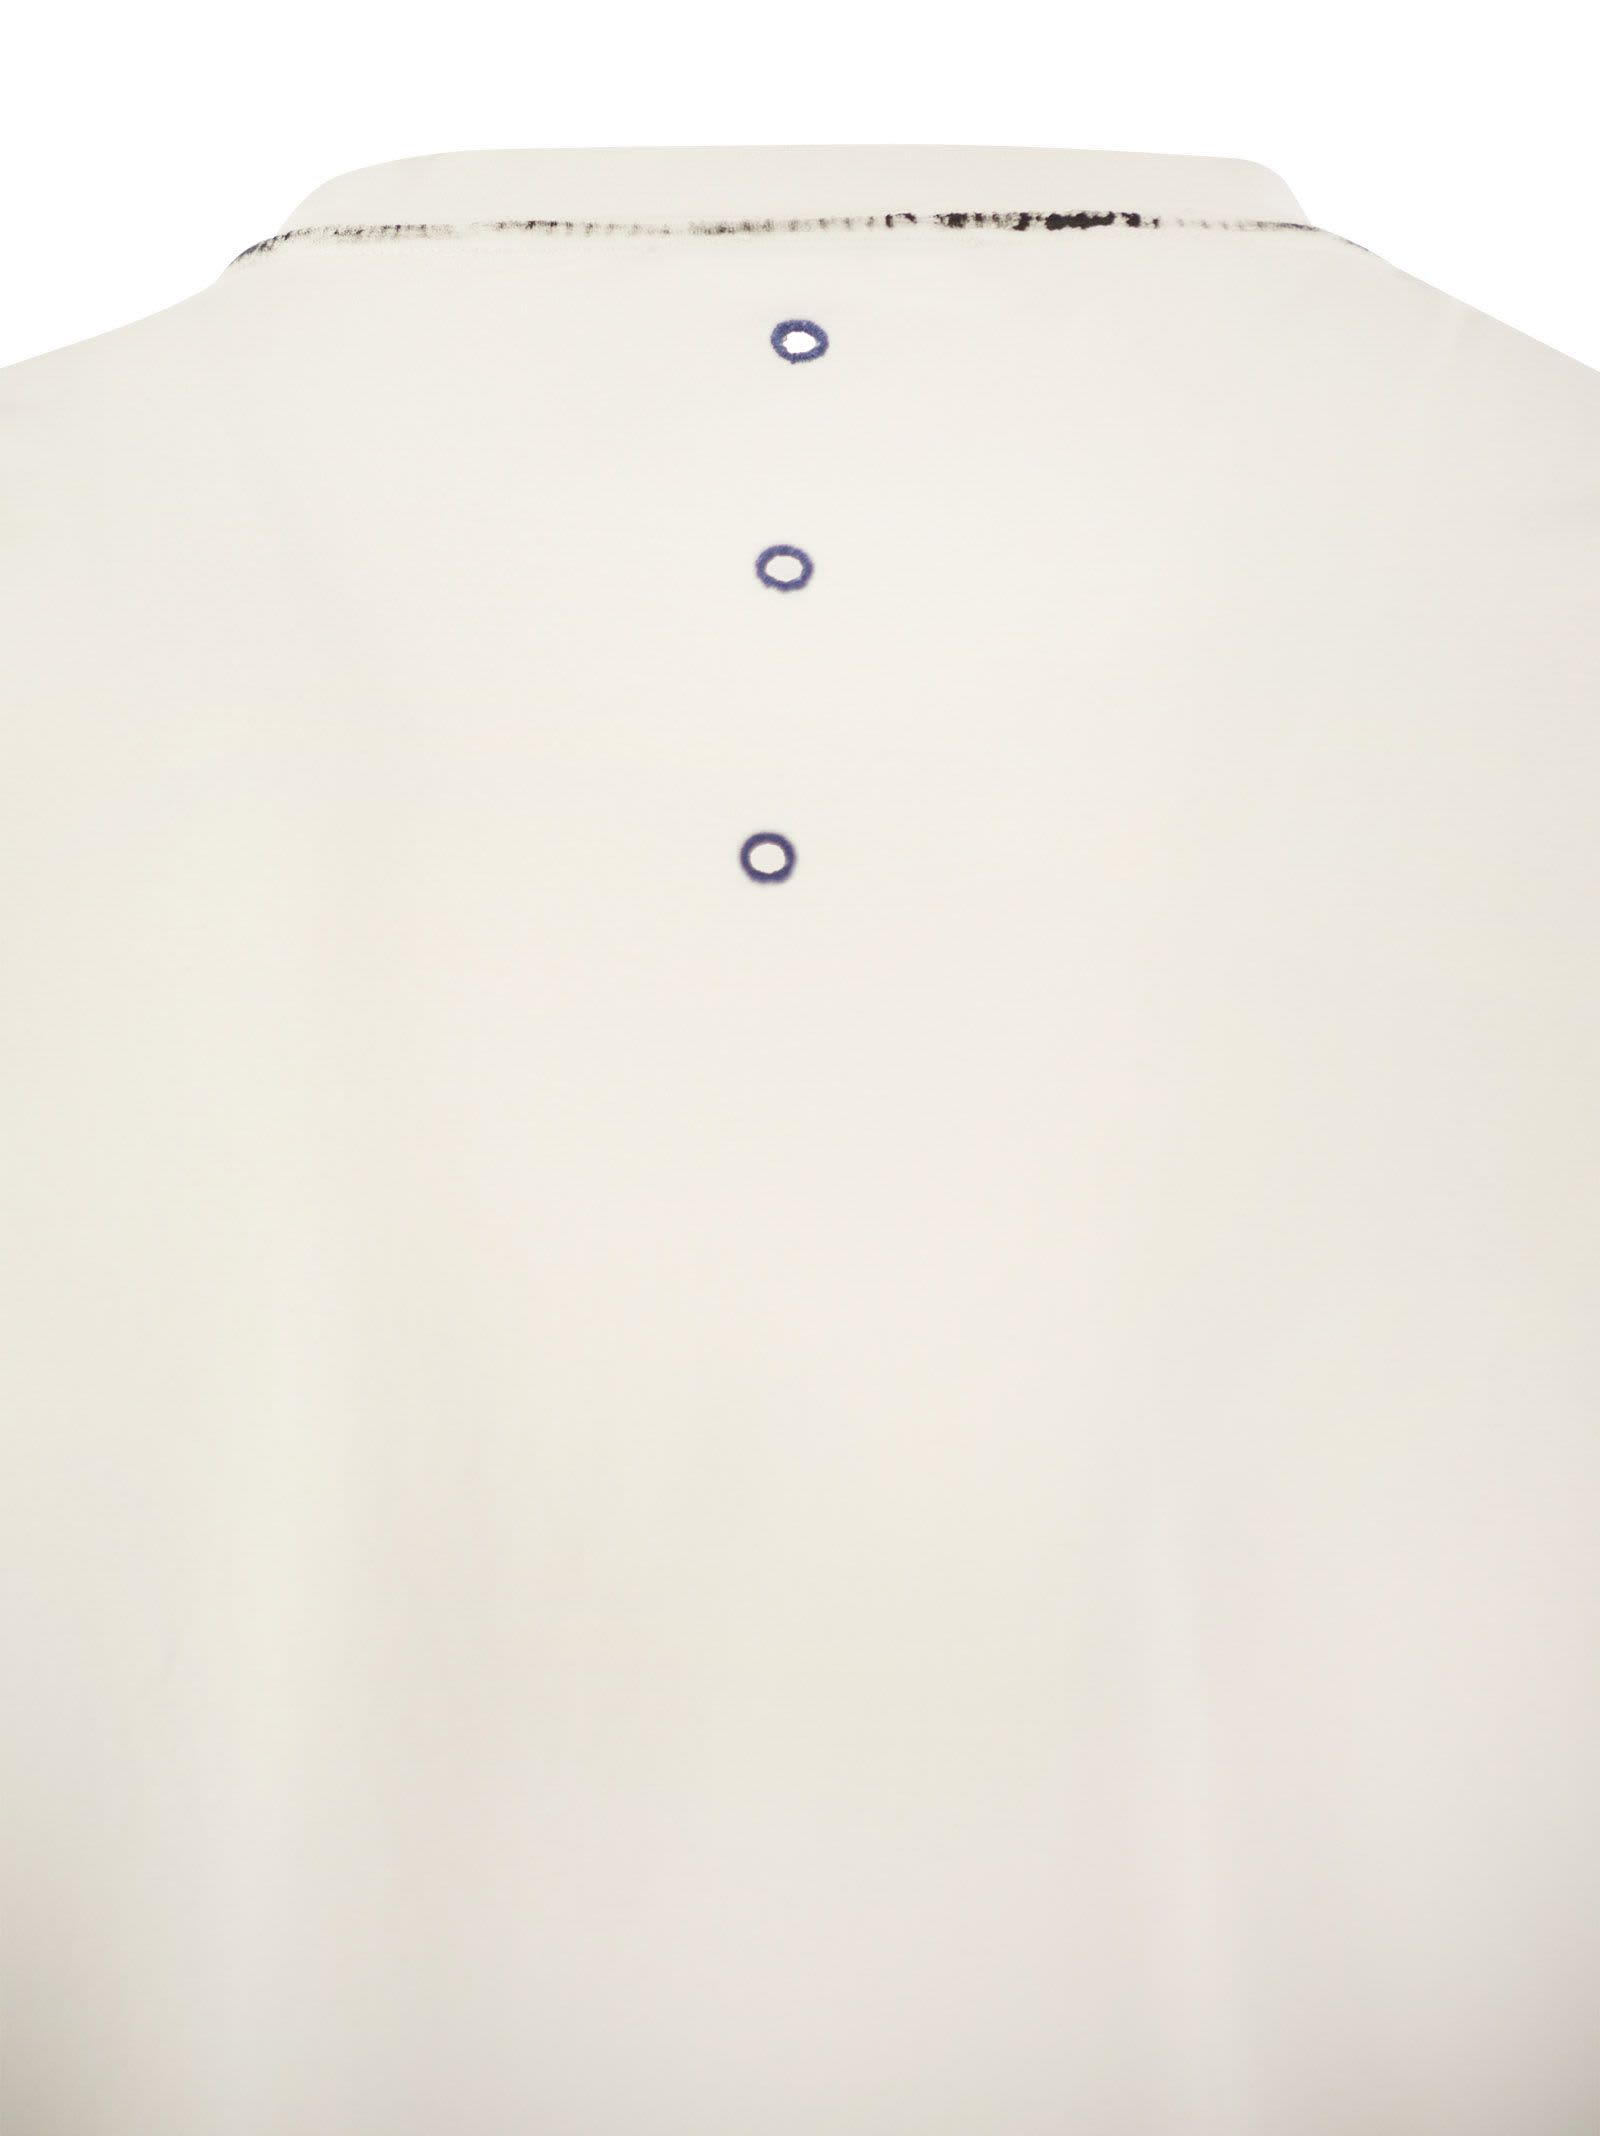 Shop Premiata Short-sleeved Cotton T-shirt In White